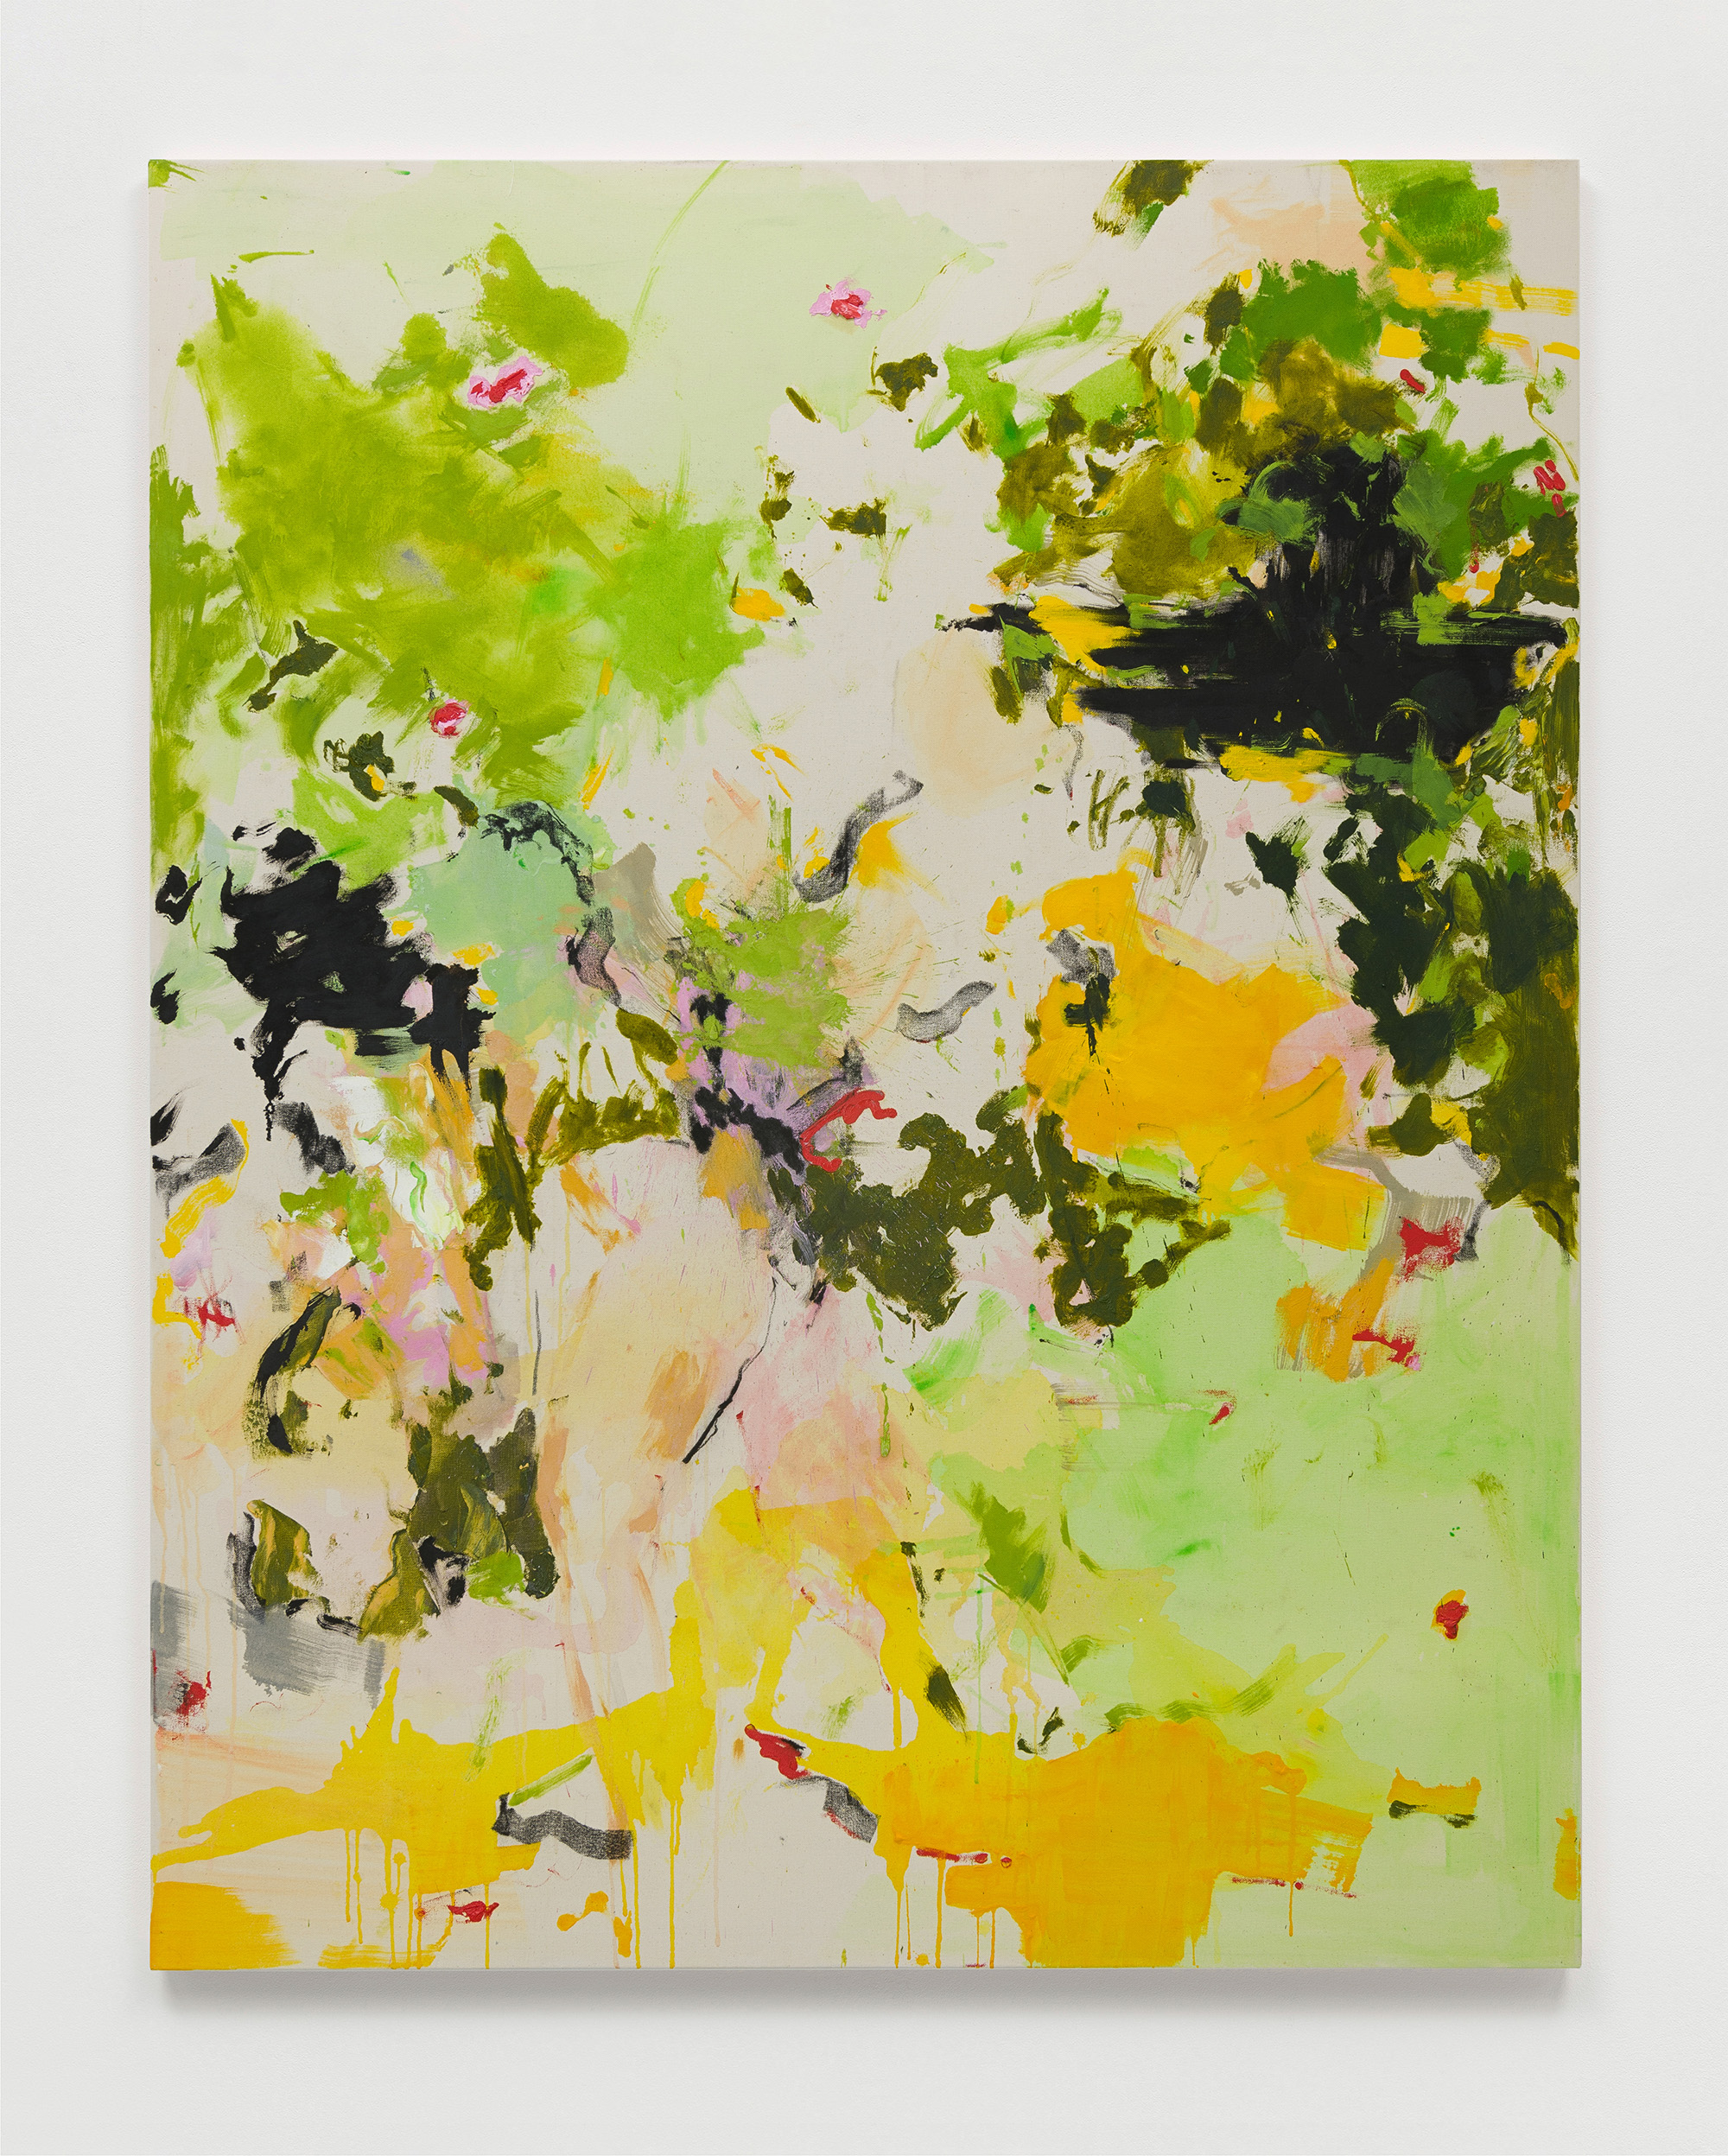 Shen Han, Spring Scenery, 2022, oil on canvas, 190 x 150 cm, 74 3/4 x 59 in